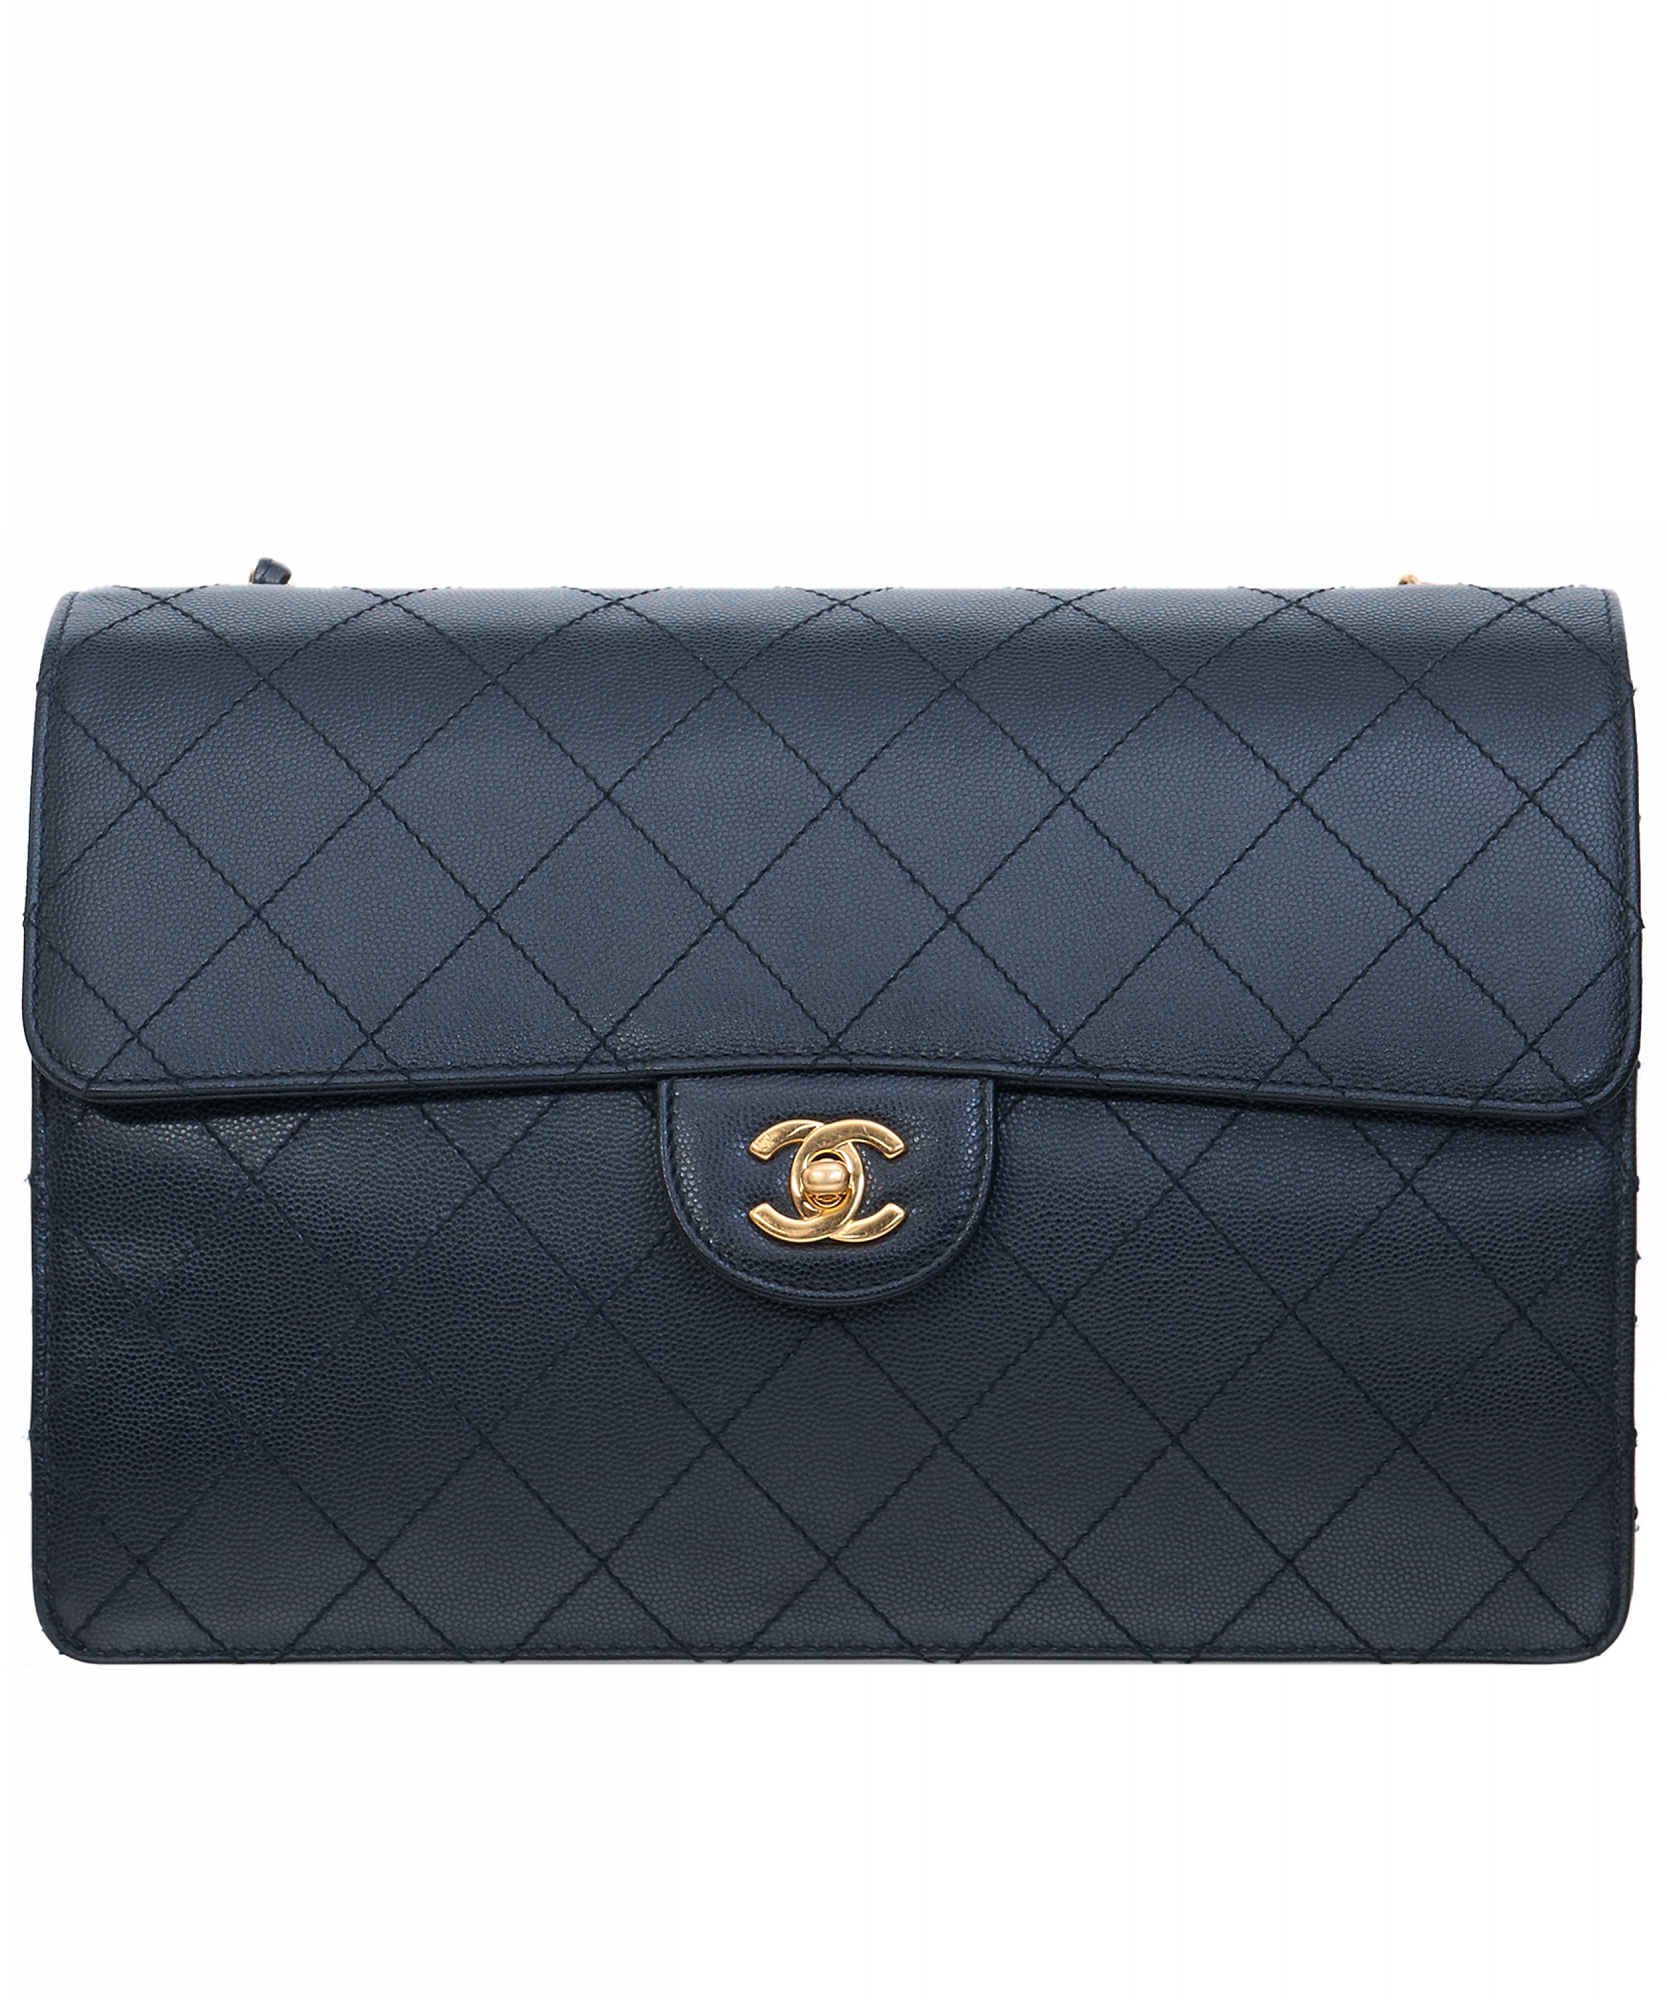 1997-1999 Chanel Black Caviar Leather Jumbo Single Flap Bag - Chanel